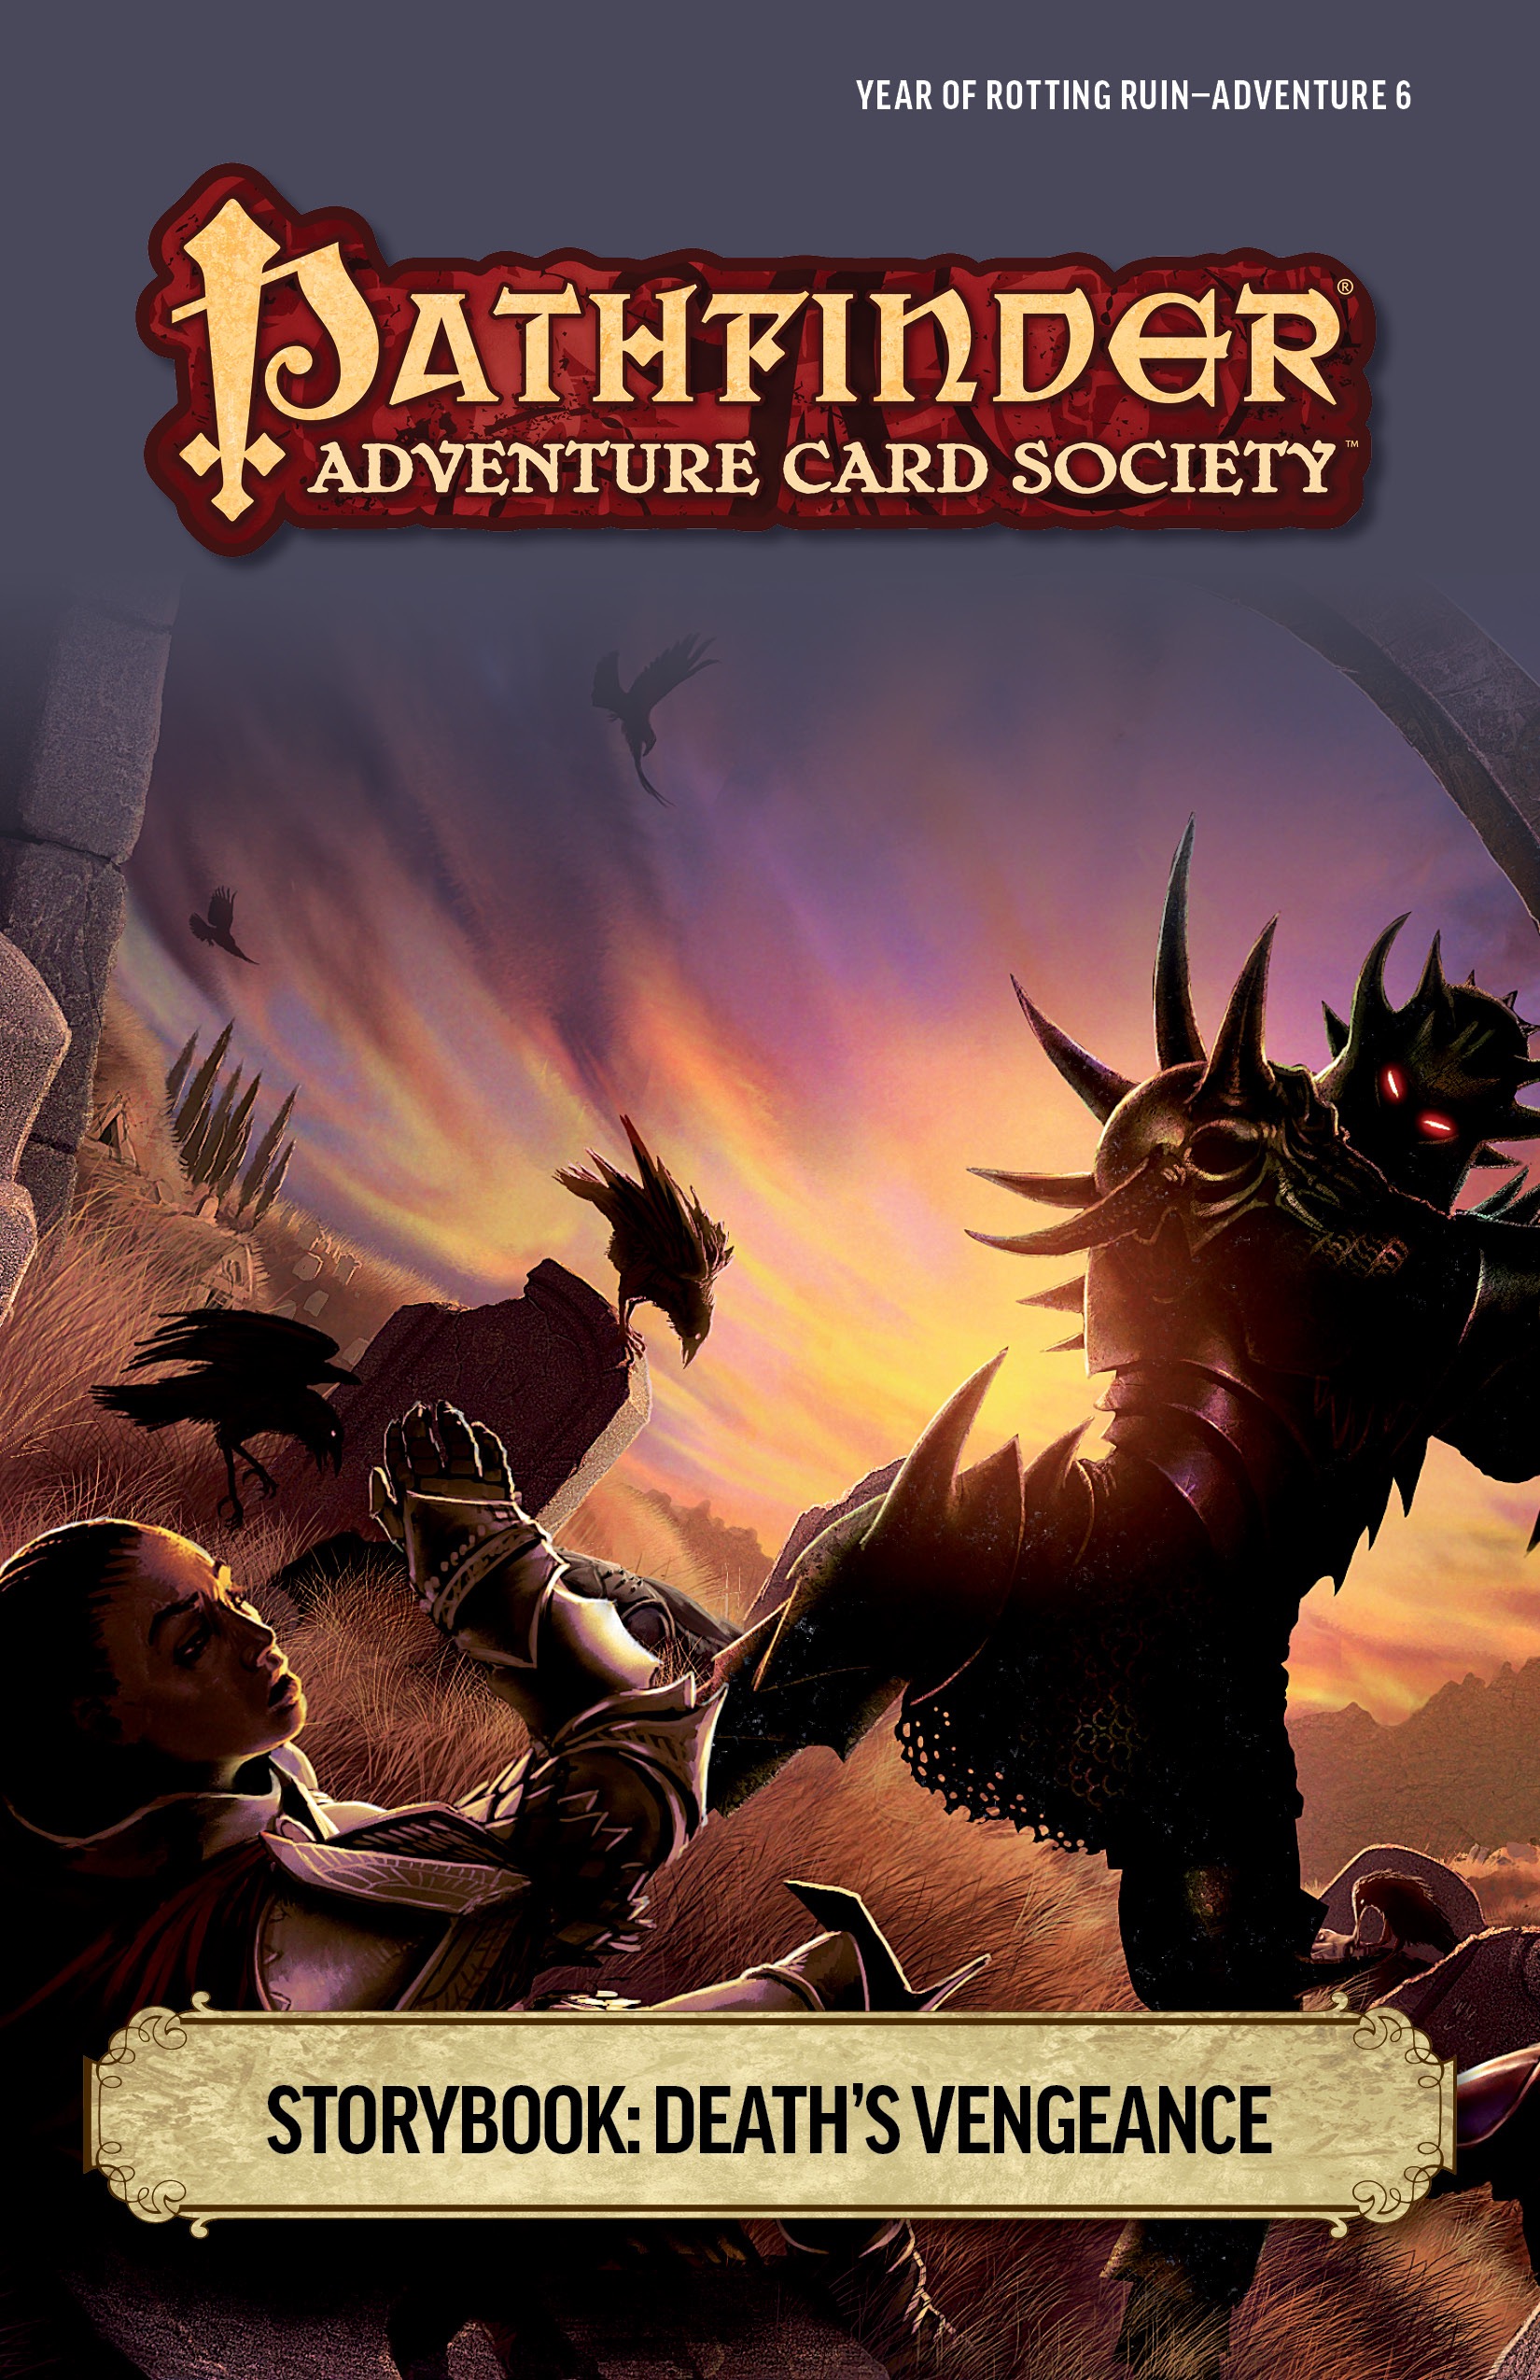 Pathfinder Extinction Curse Adventure Path: The Apocalypse Prophet book cover